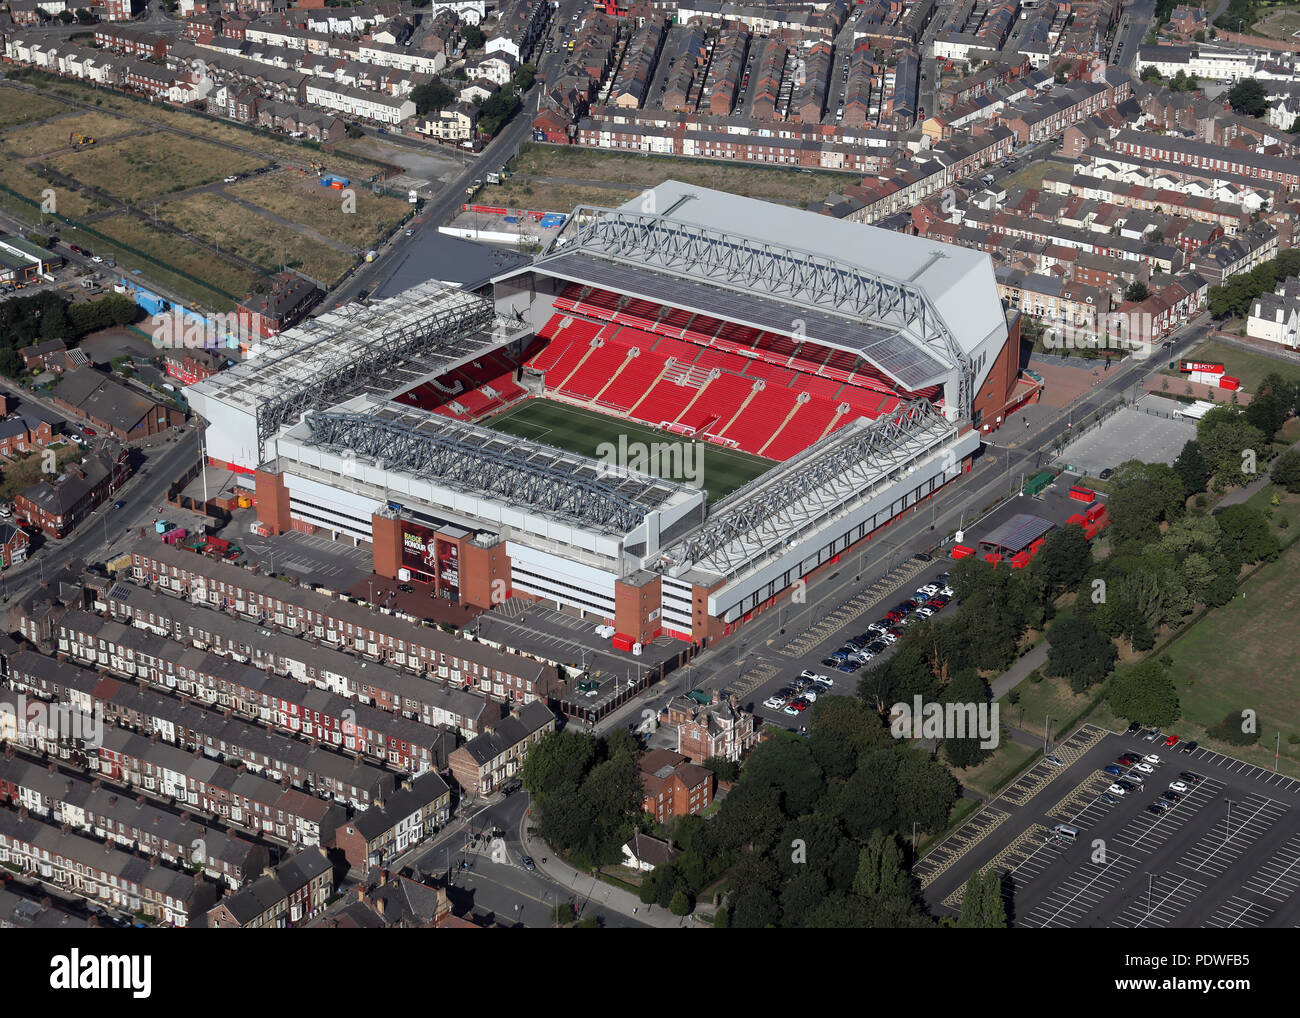 Vista aérea del Estadio Anfield Liverpool FC de fútbol de Inglaterra Foto de stock